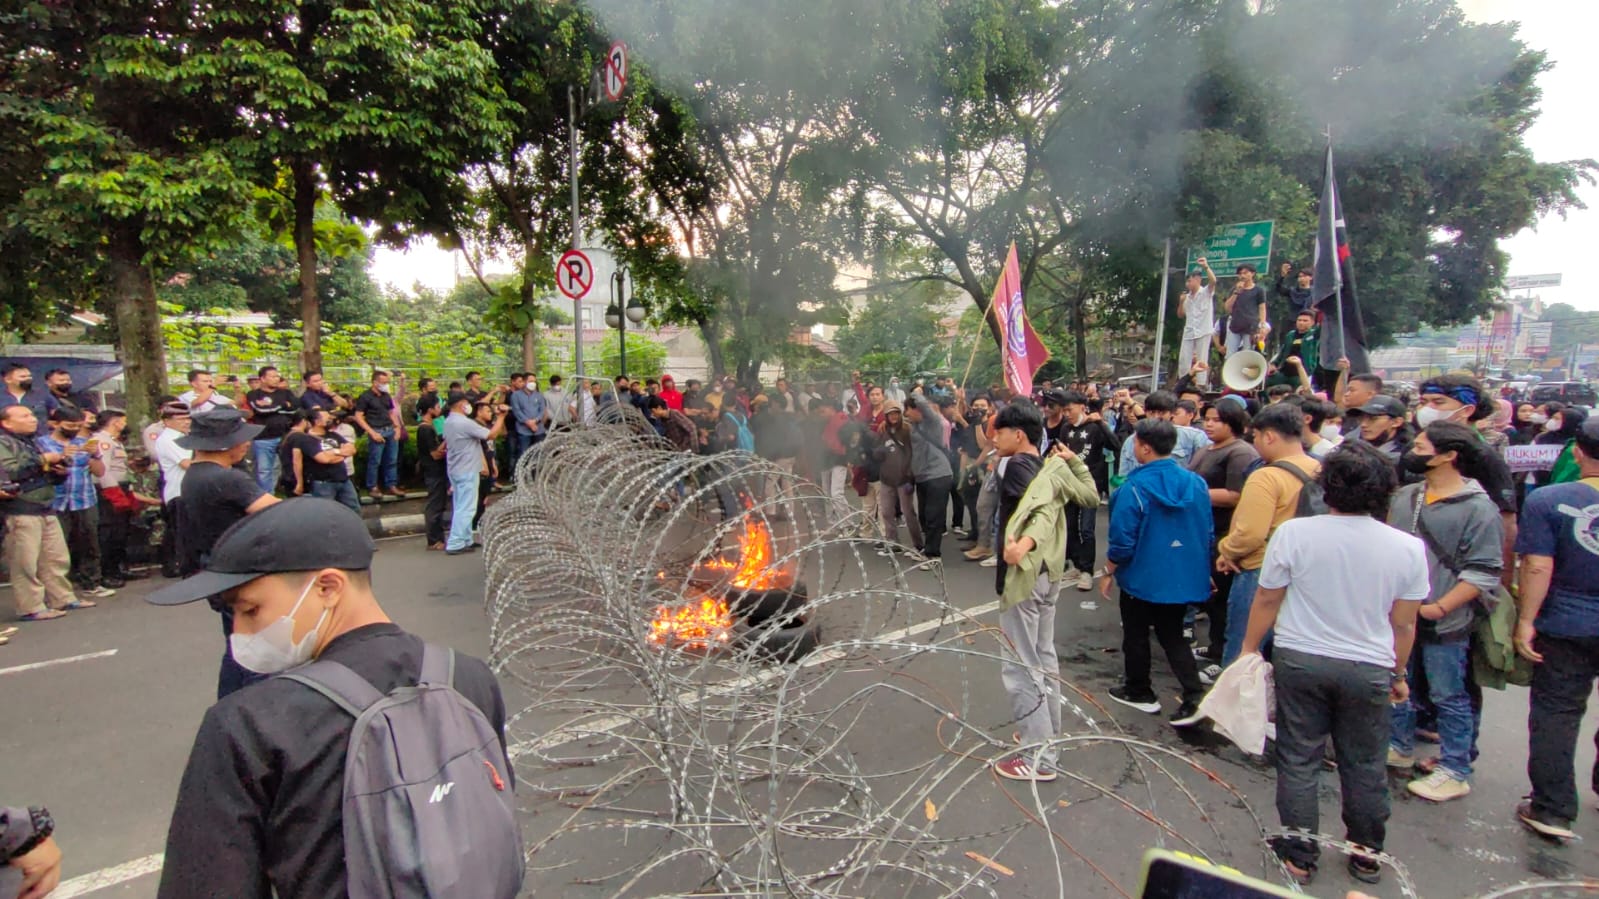 Demo Mahasiswa di Bogor Memanas, Massa Aksi Injak Kawat Duri Hingga Bakar Ban 